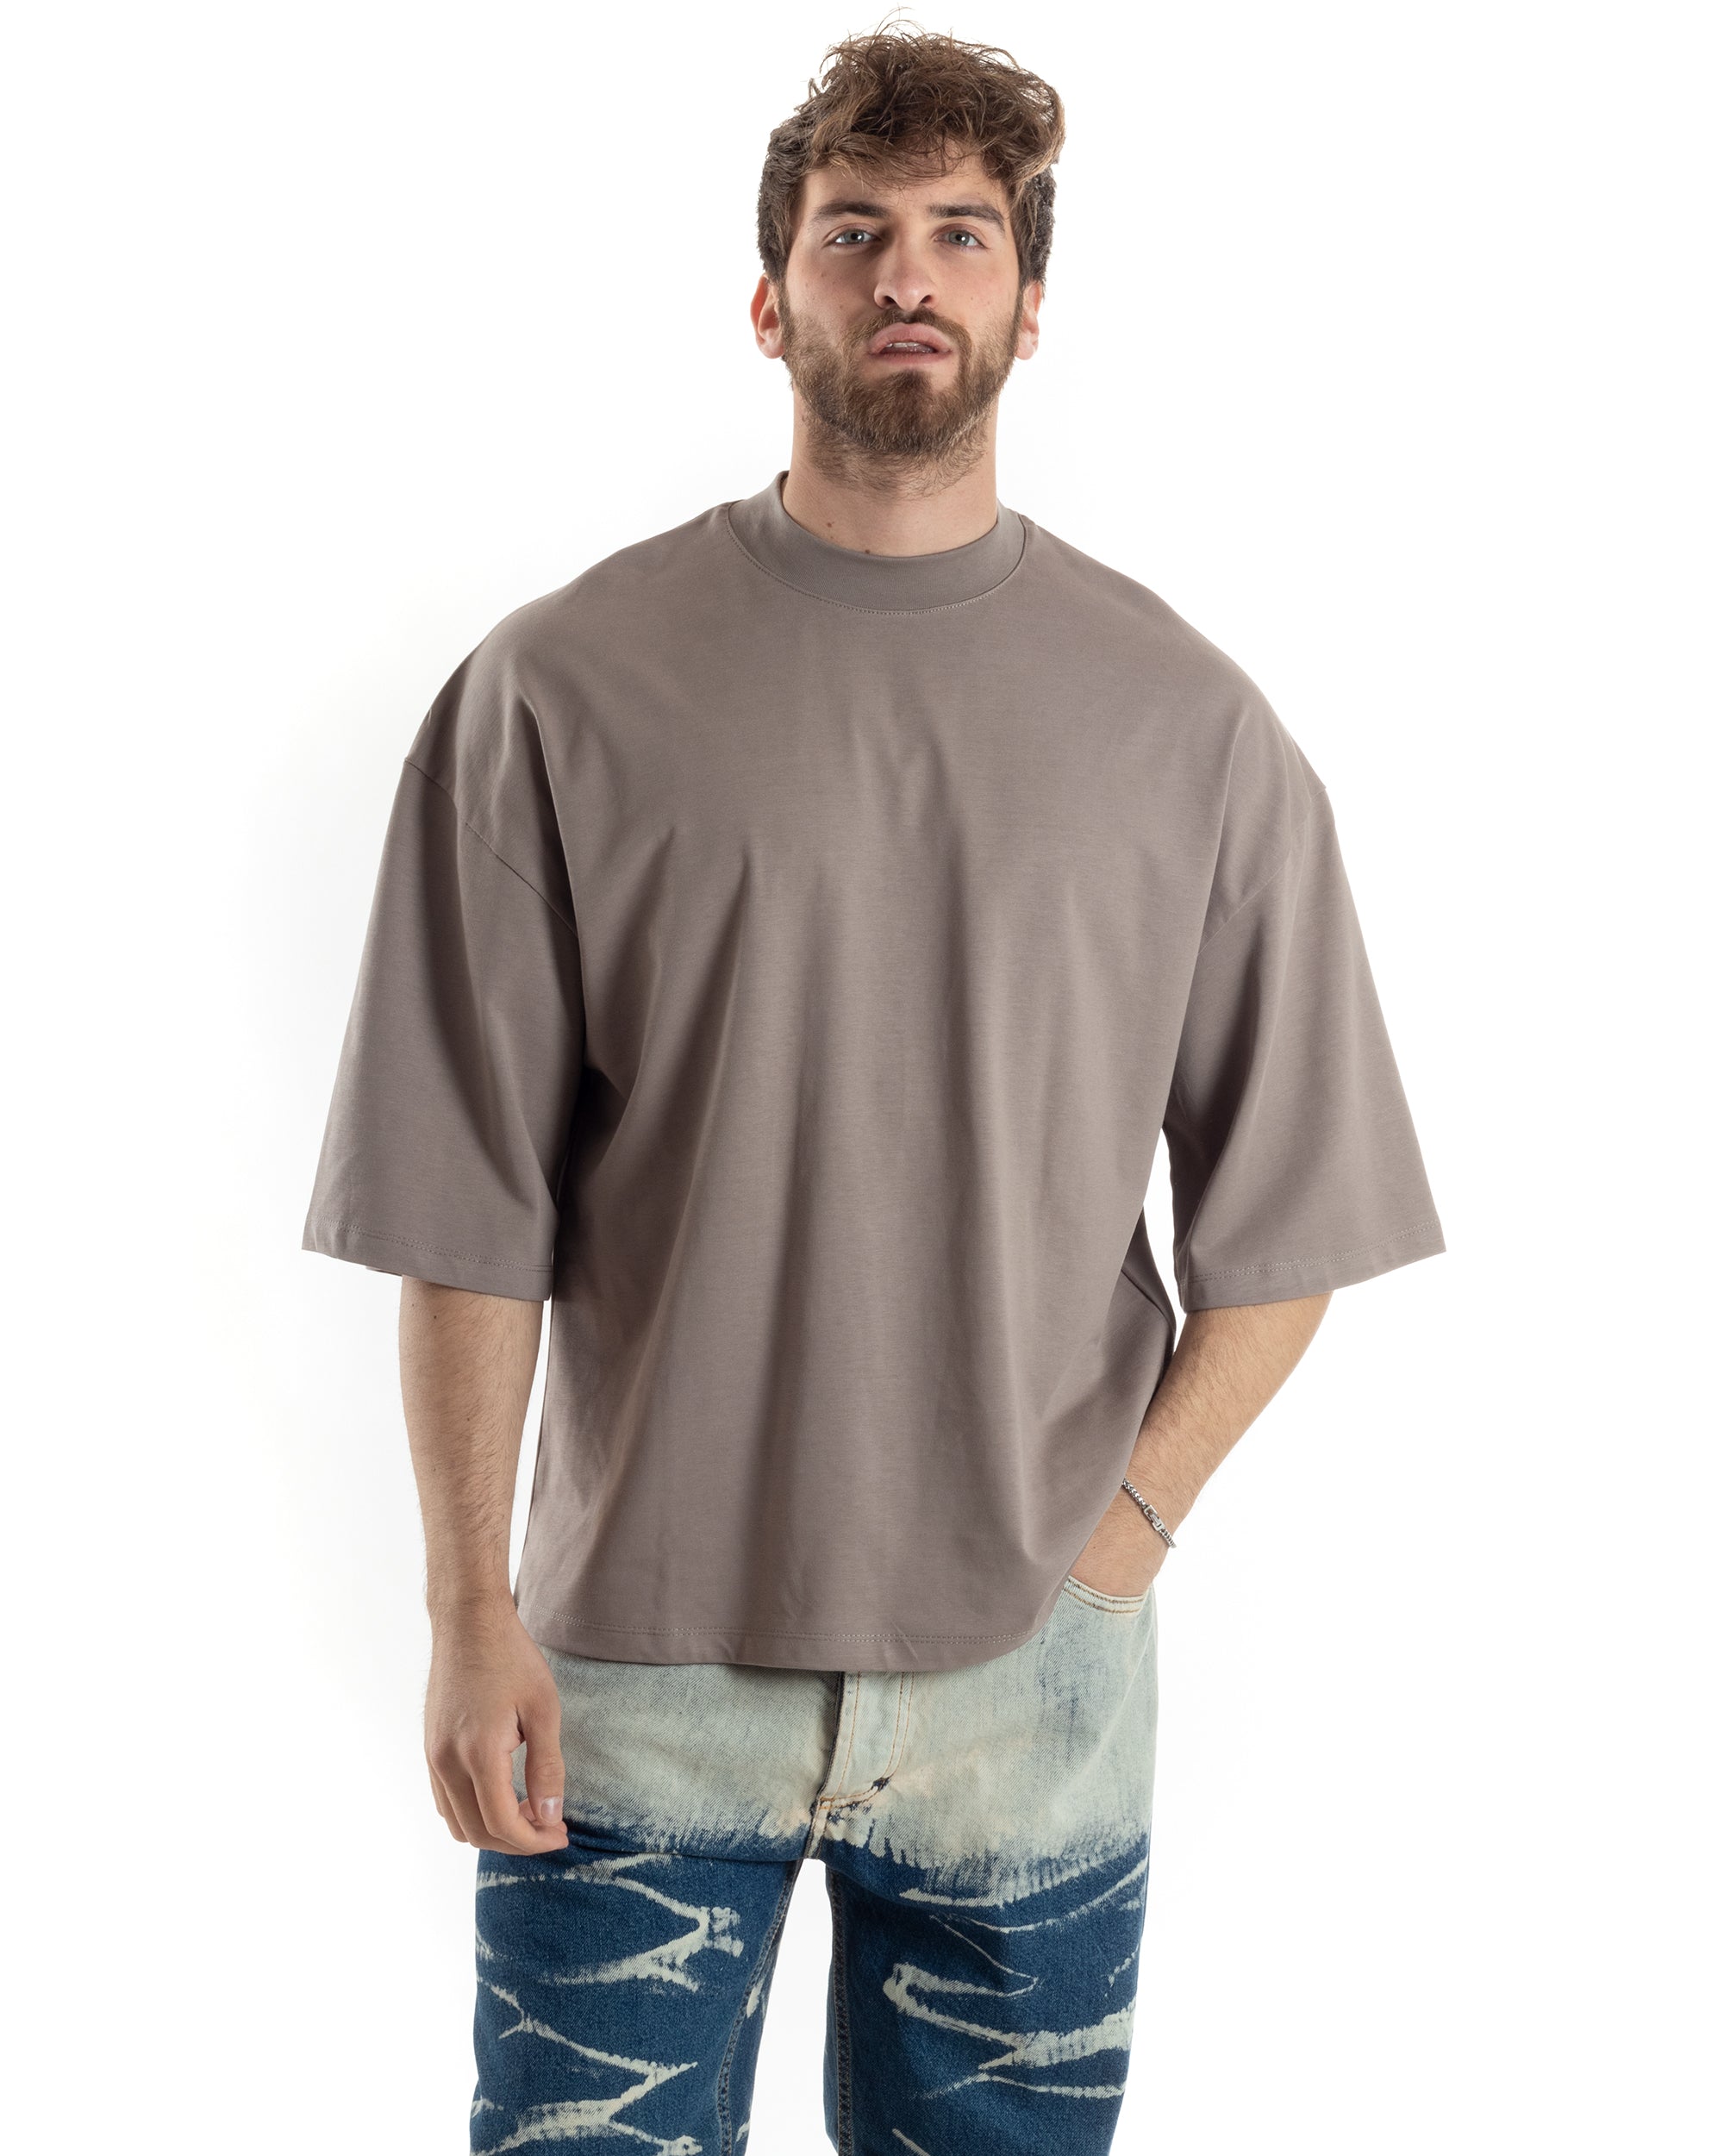 T-shirt Uomo Girocollo Boxy Fit Oversize Cotone Spalla Scesa Gola Alta Casual Basic Fango GIOSAL-TS3025A